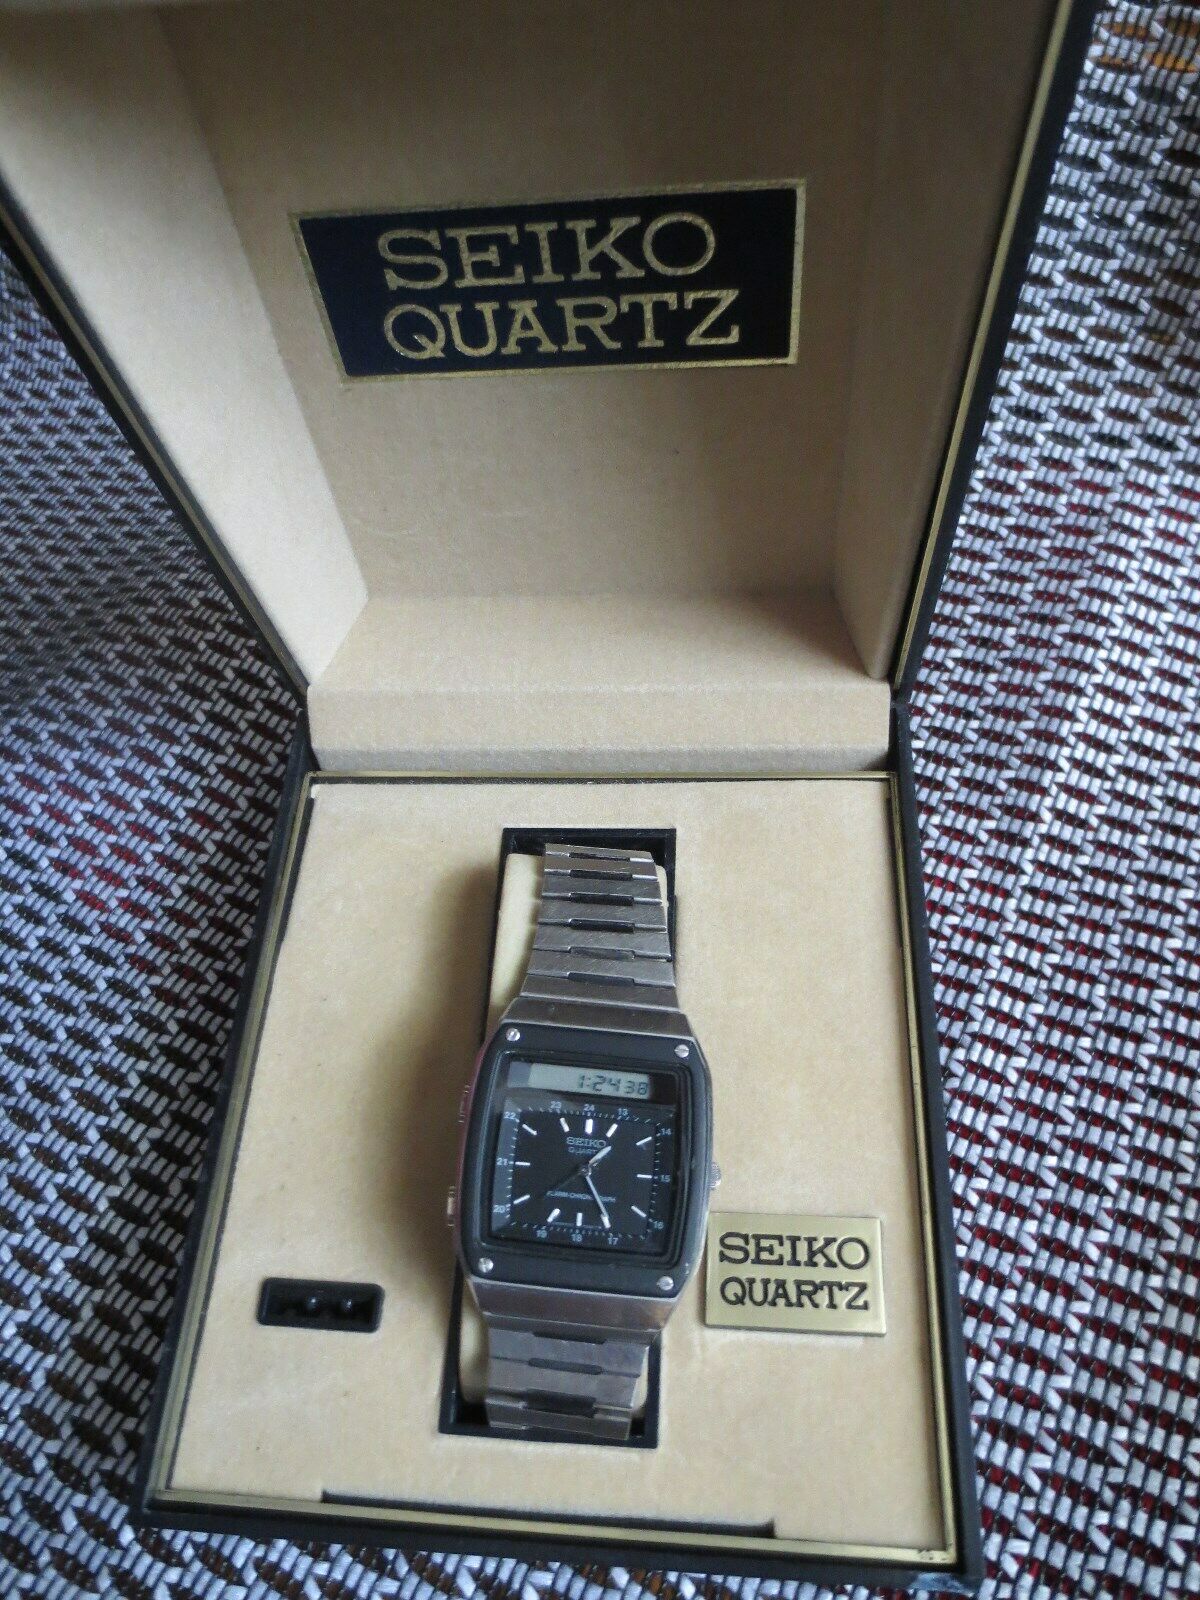 Very Rare Vintage James Bond Seiko H357-5049 LCD Digital Watch - 1980's |  WatchCharts